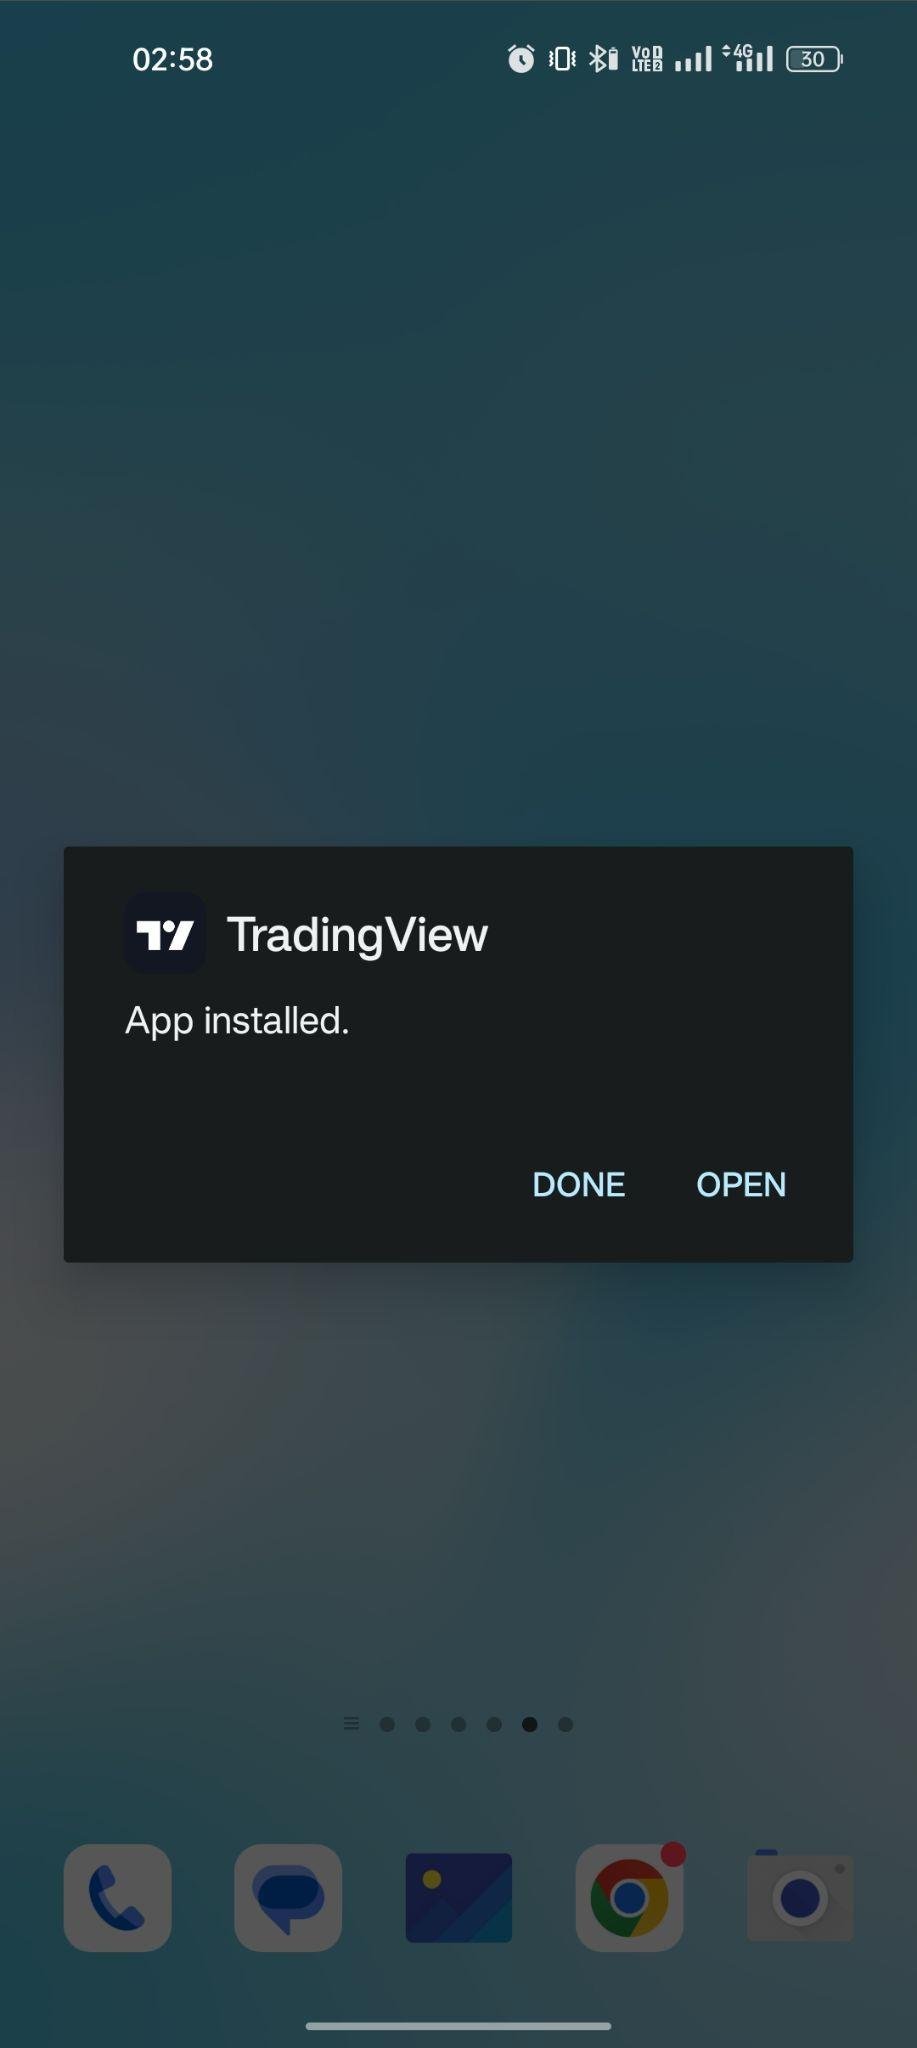 TradingView apk installed